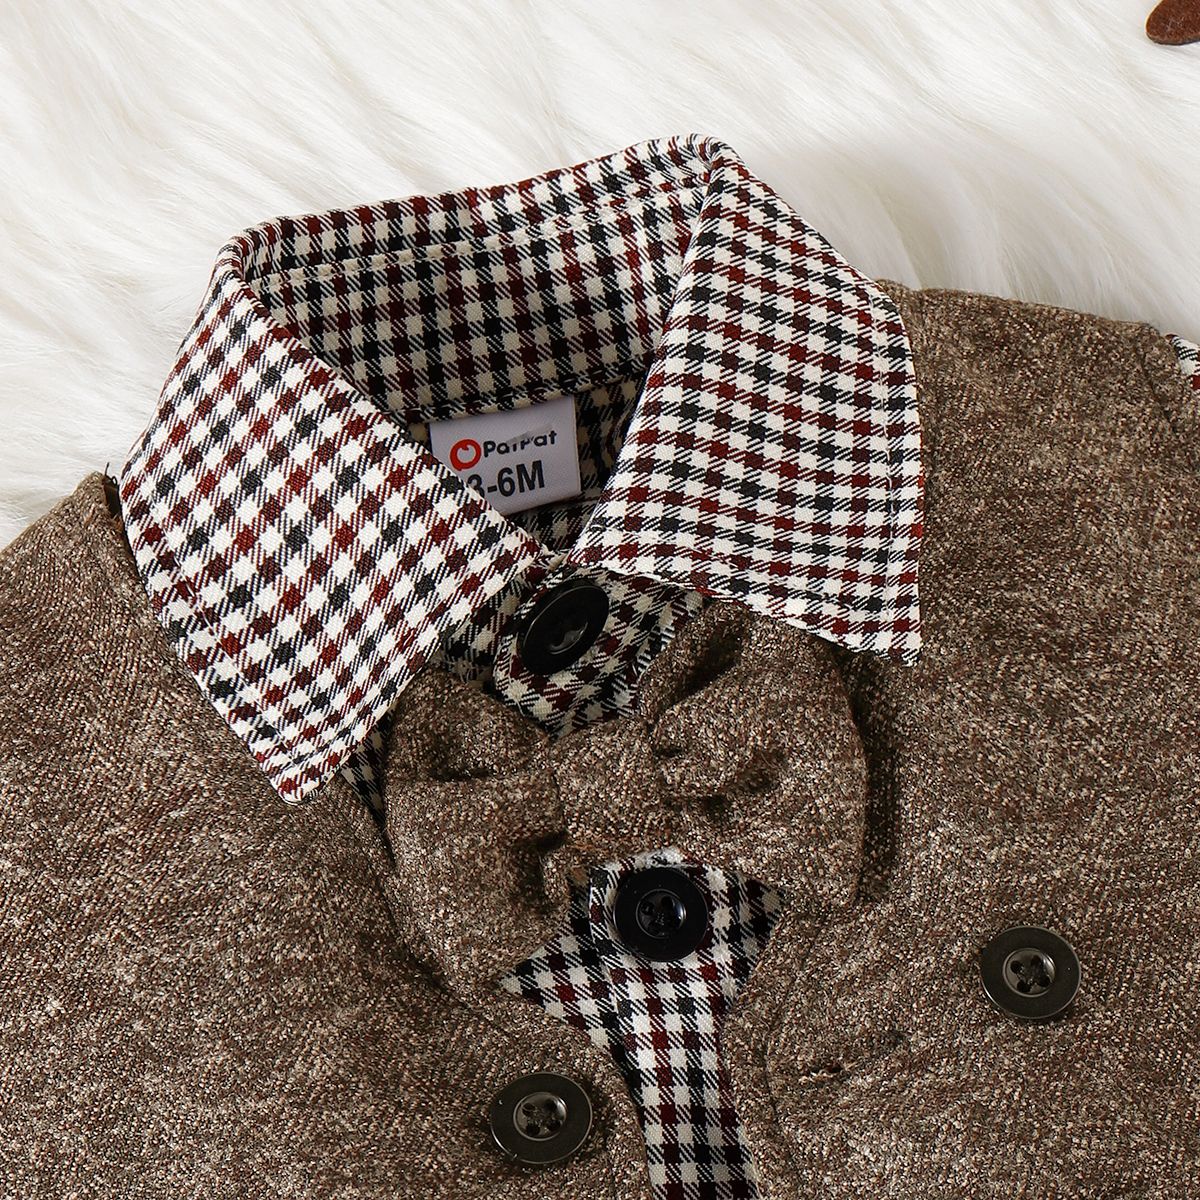 3PCS Baby Boy Elegant Grid/Houndstooth Shirt Collar Long Sleeve Set